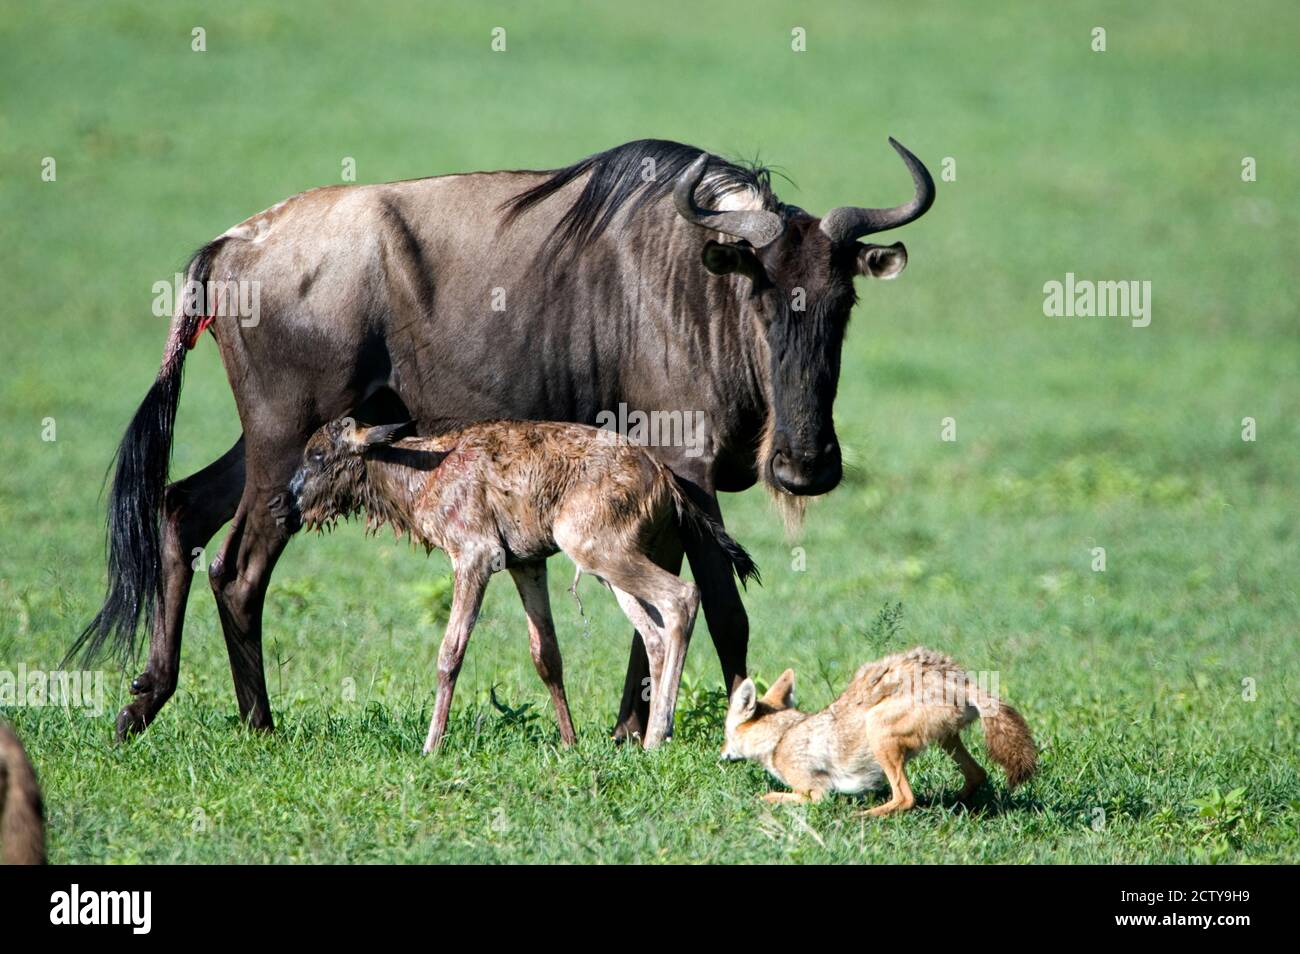 Neugeborenes wildebeestes Kalb und Mutter mit Jagd Goldene Schakale (Canis aureus), Ngorongoro Krater, Ngorongoro, Tansania Stockfoto